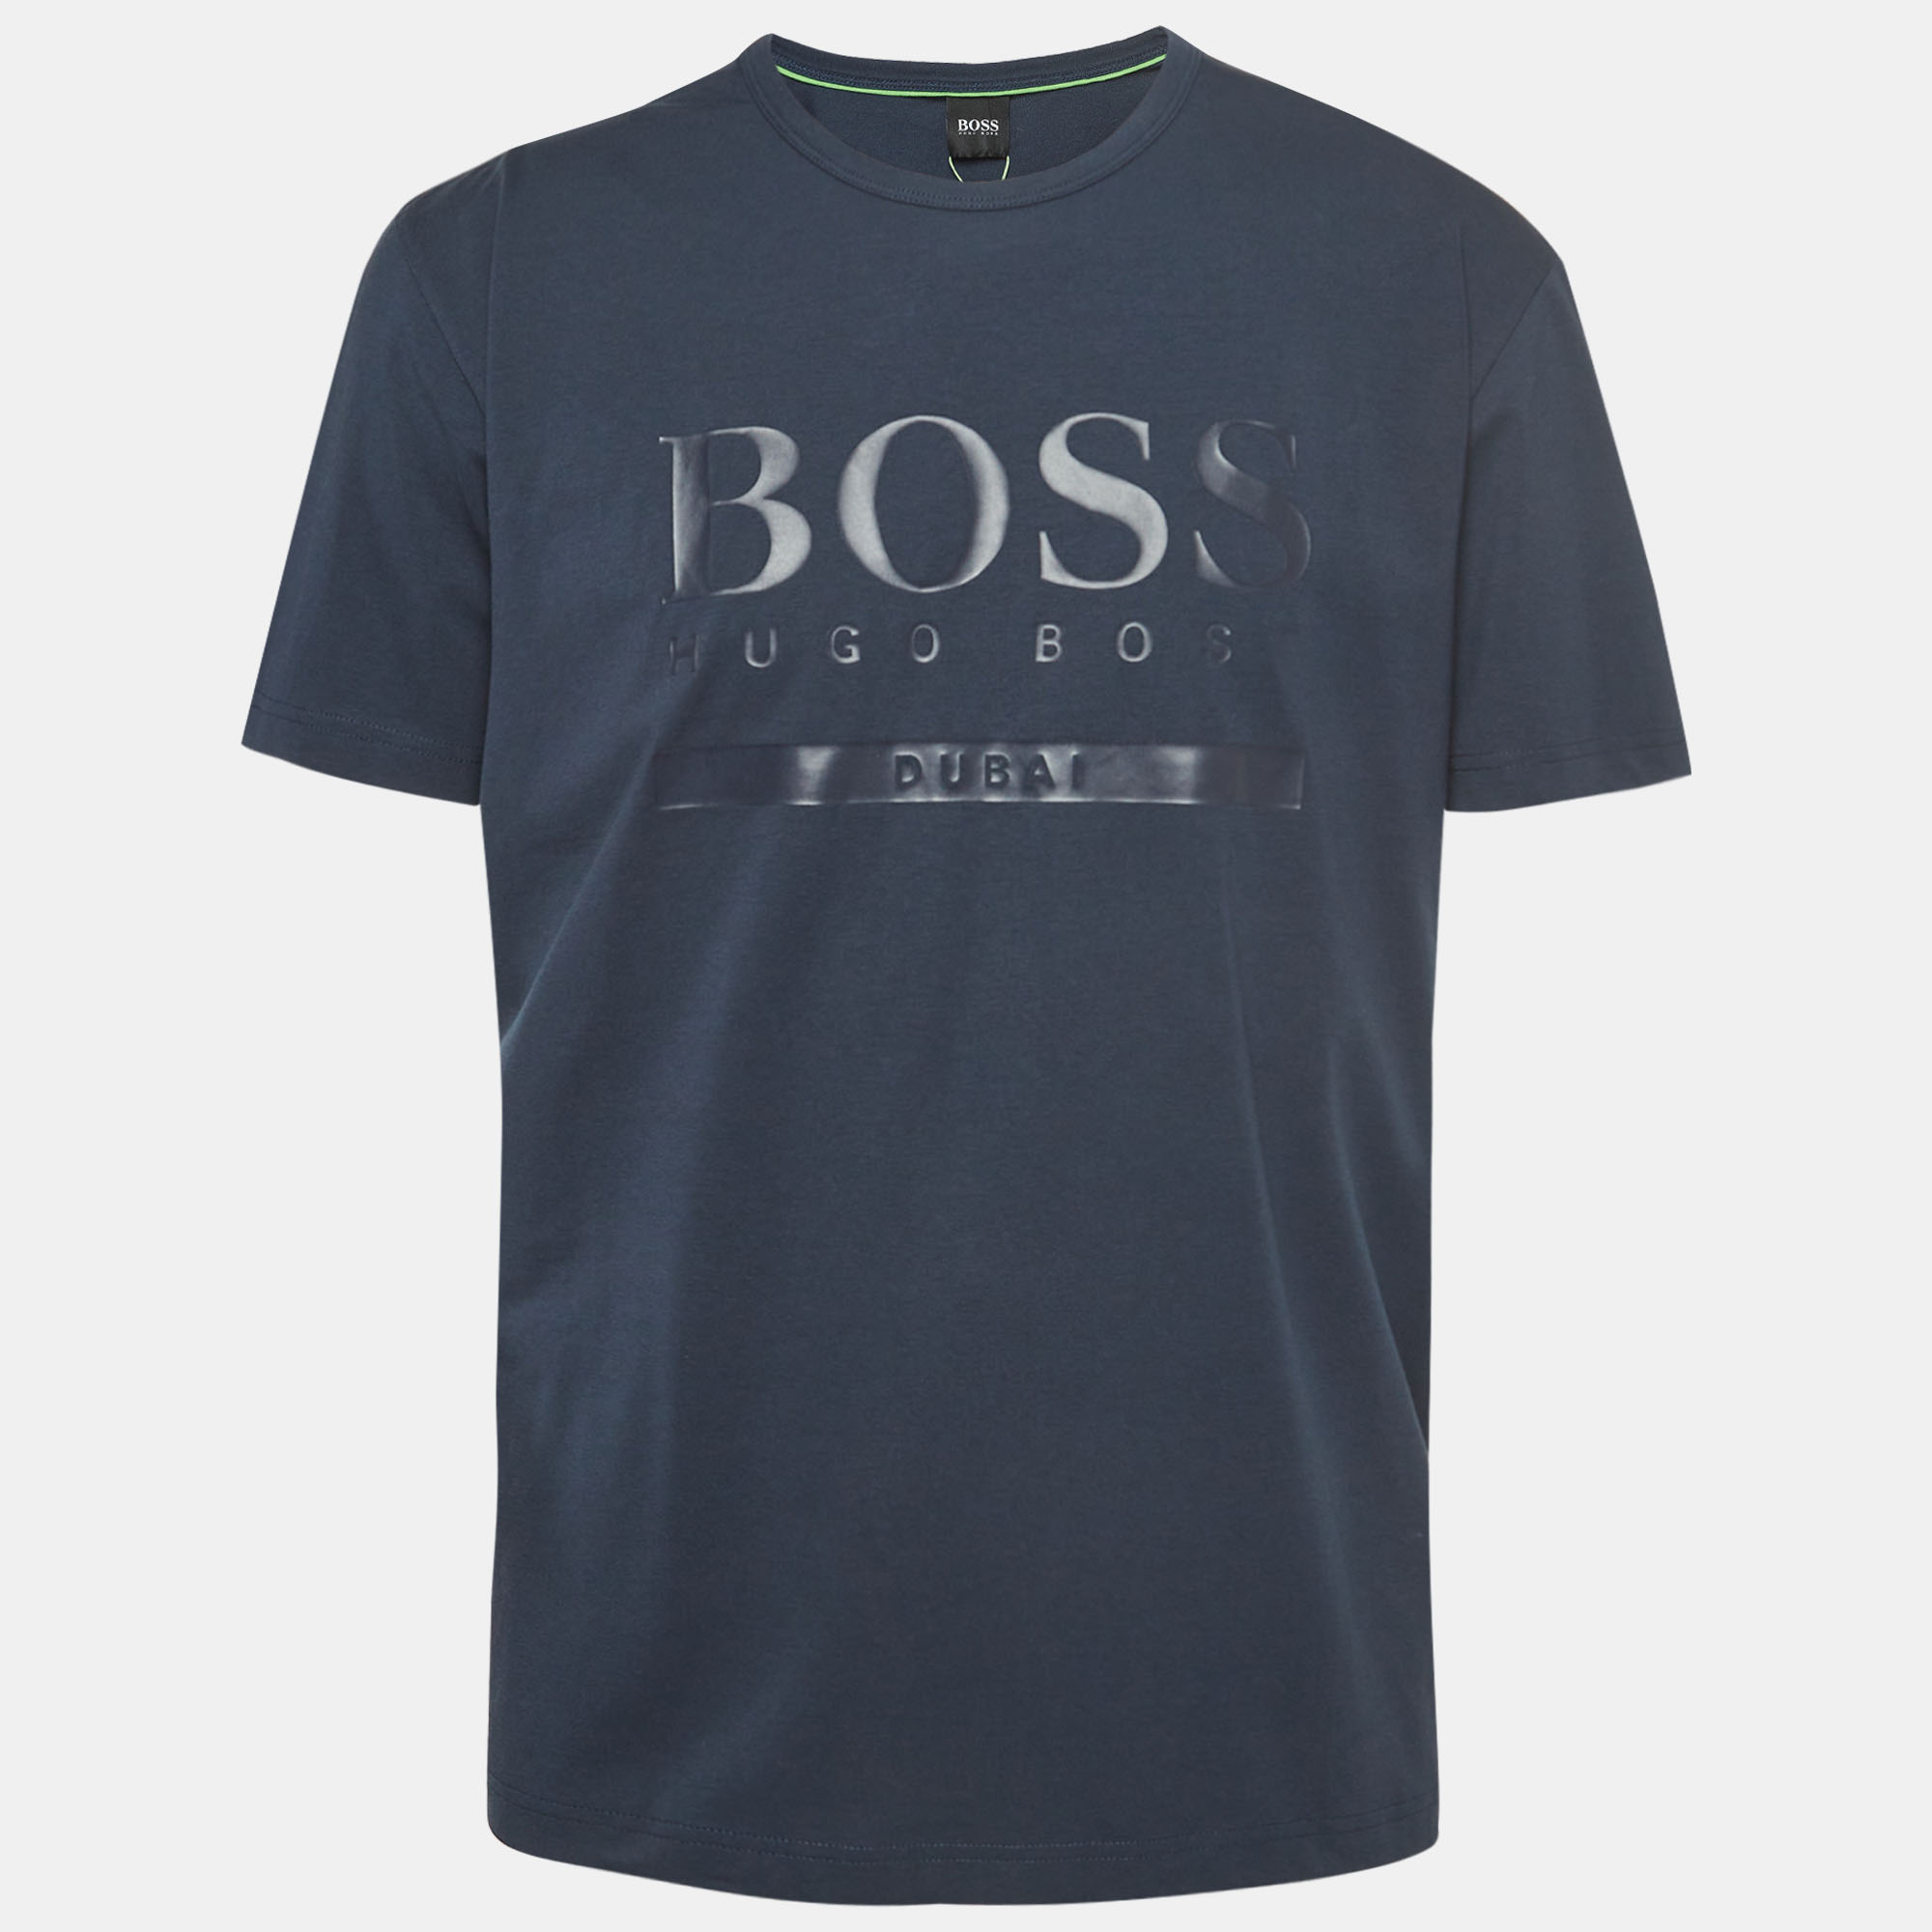 Boss by hugo boss navy blue logo print cotton knit half sleeve t-shirt xxl